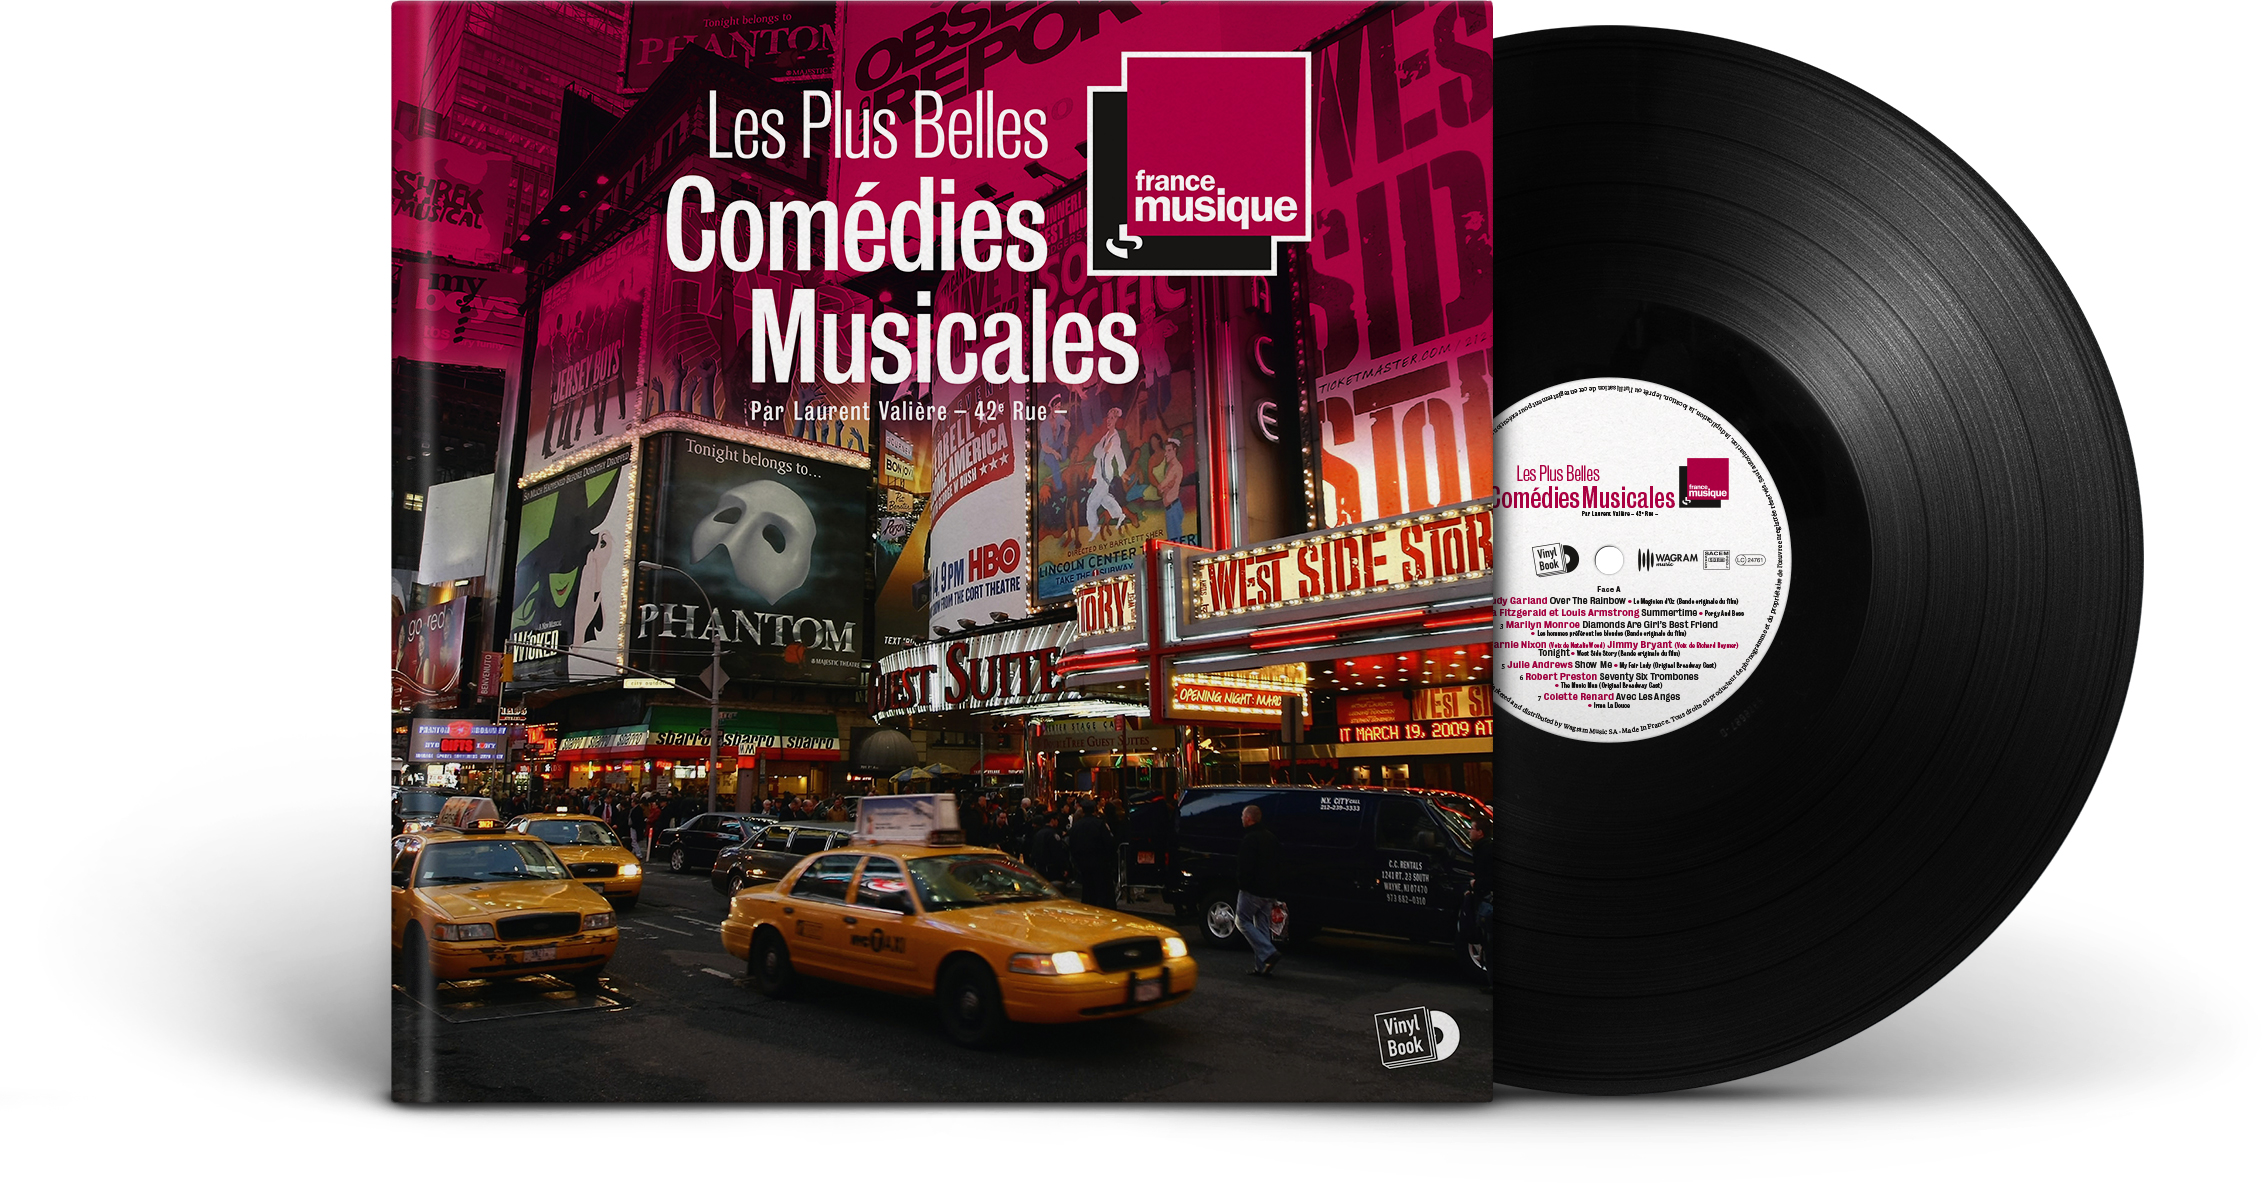 WAGRAM-3384196-FranceMusique-ComediesMusicales-simulation-vinylbook1.jpg